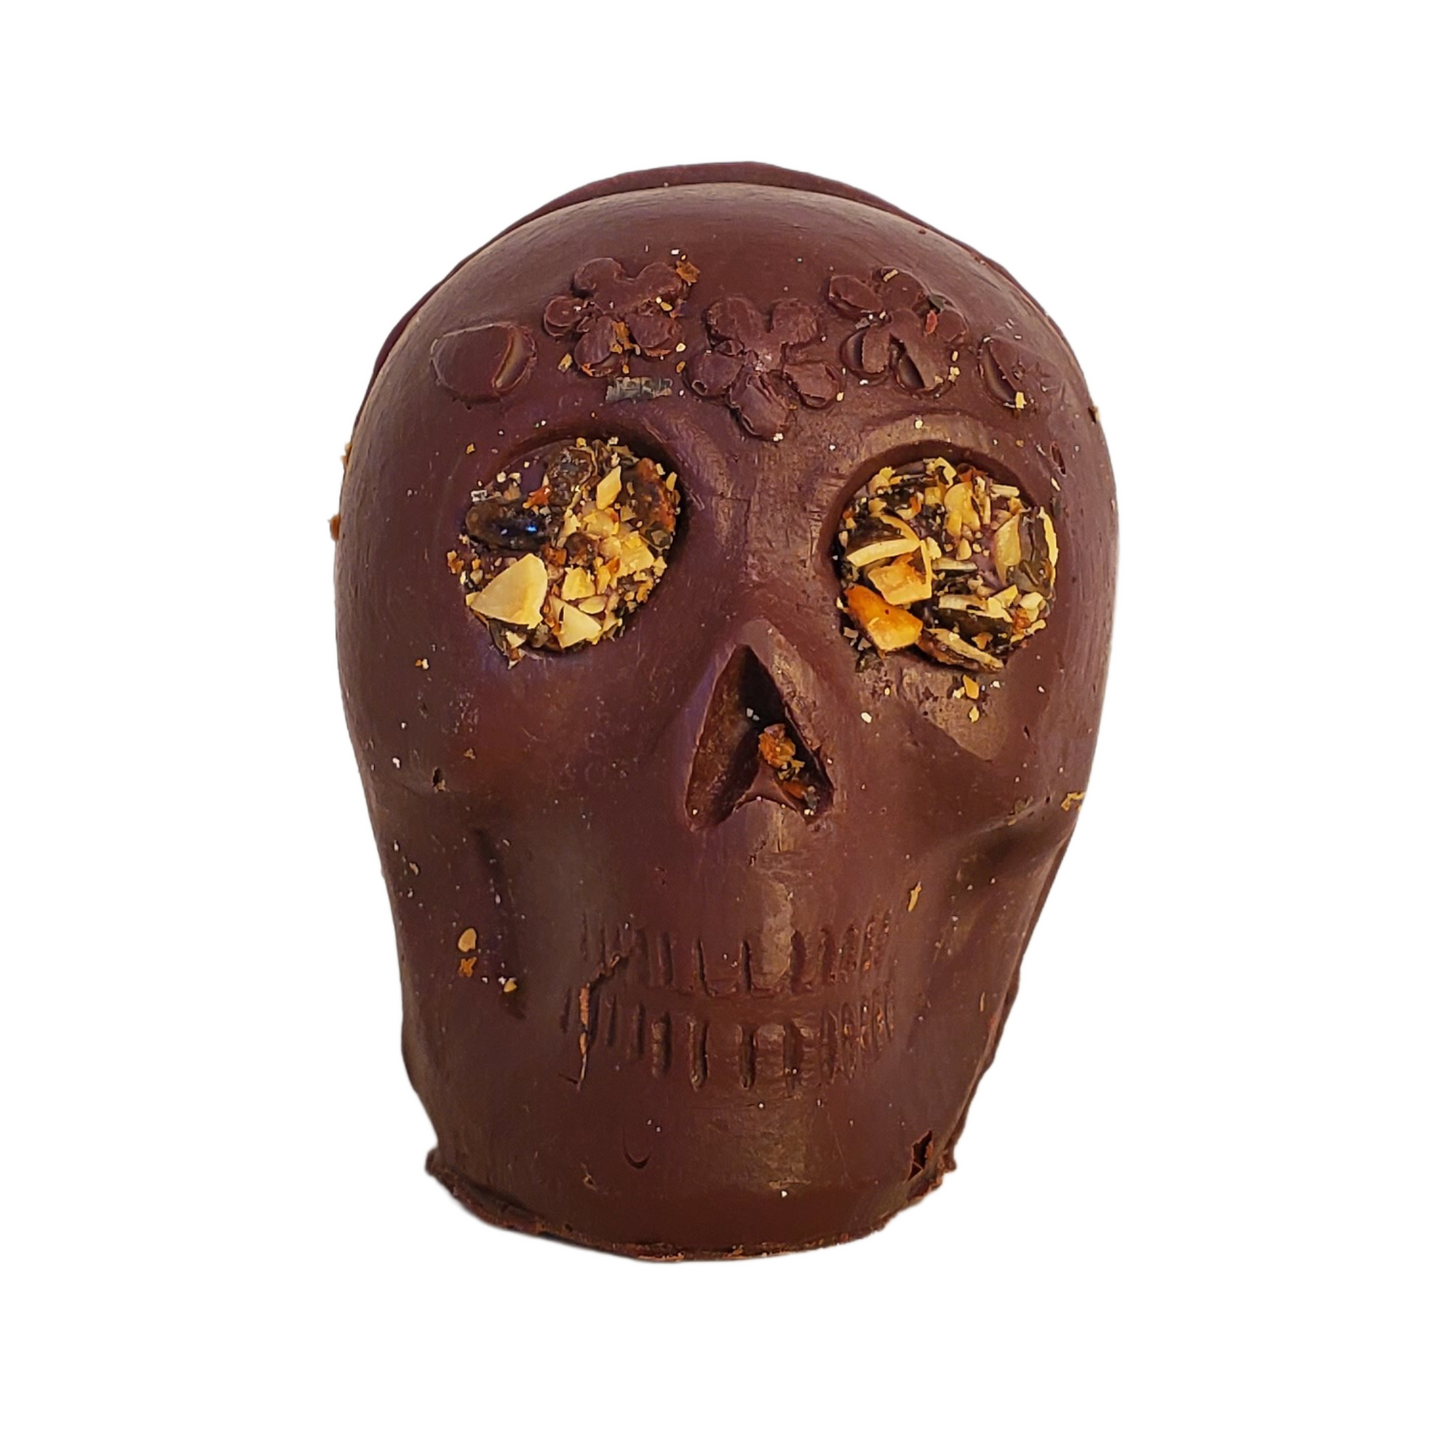 Chocolate skull figurine with pumpkin seed eyes and flower headband decoration.